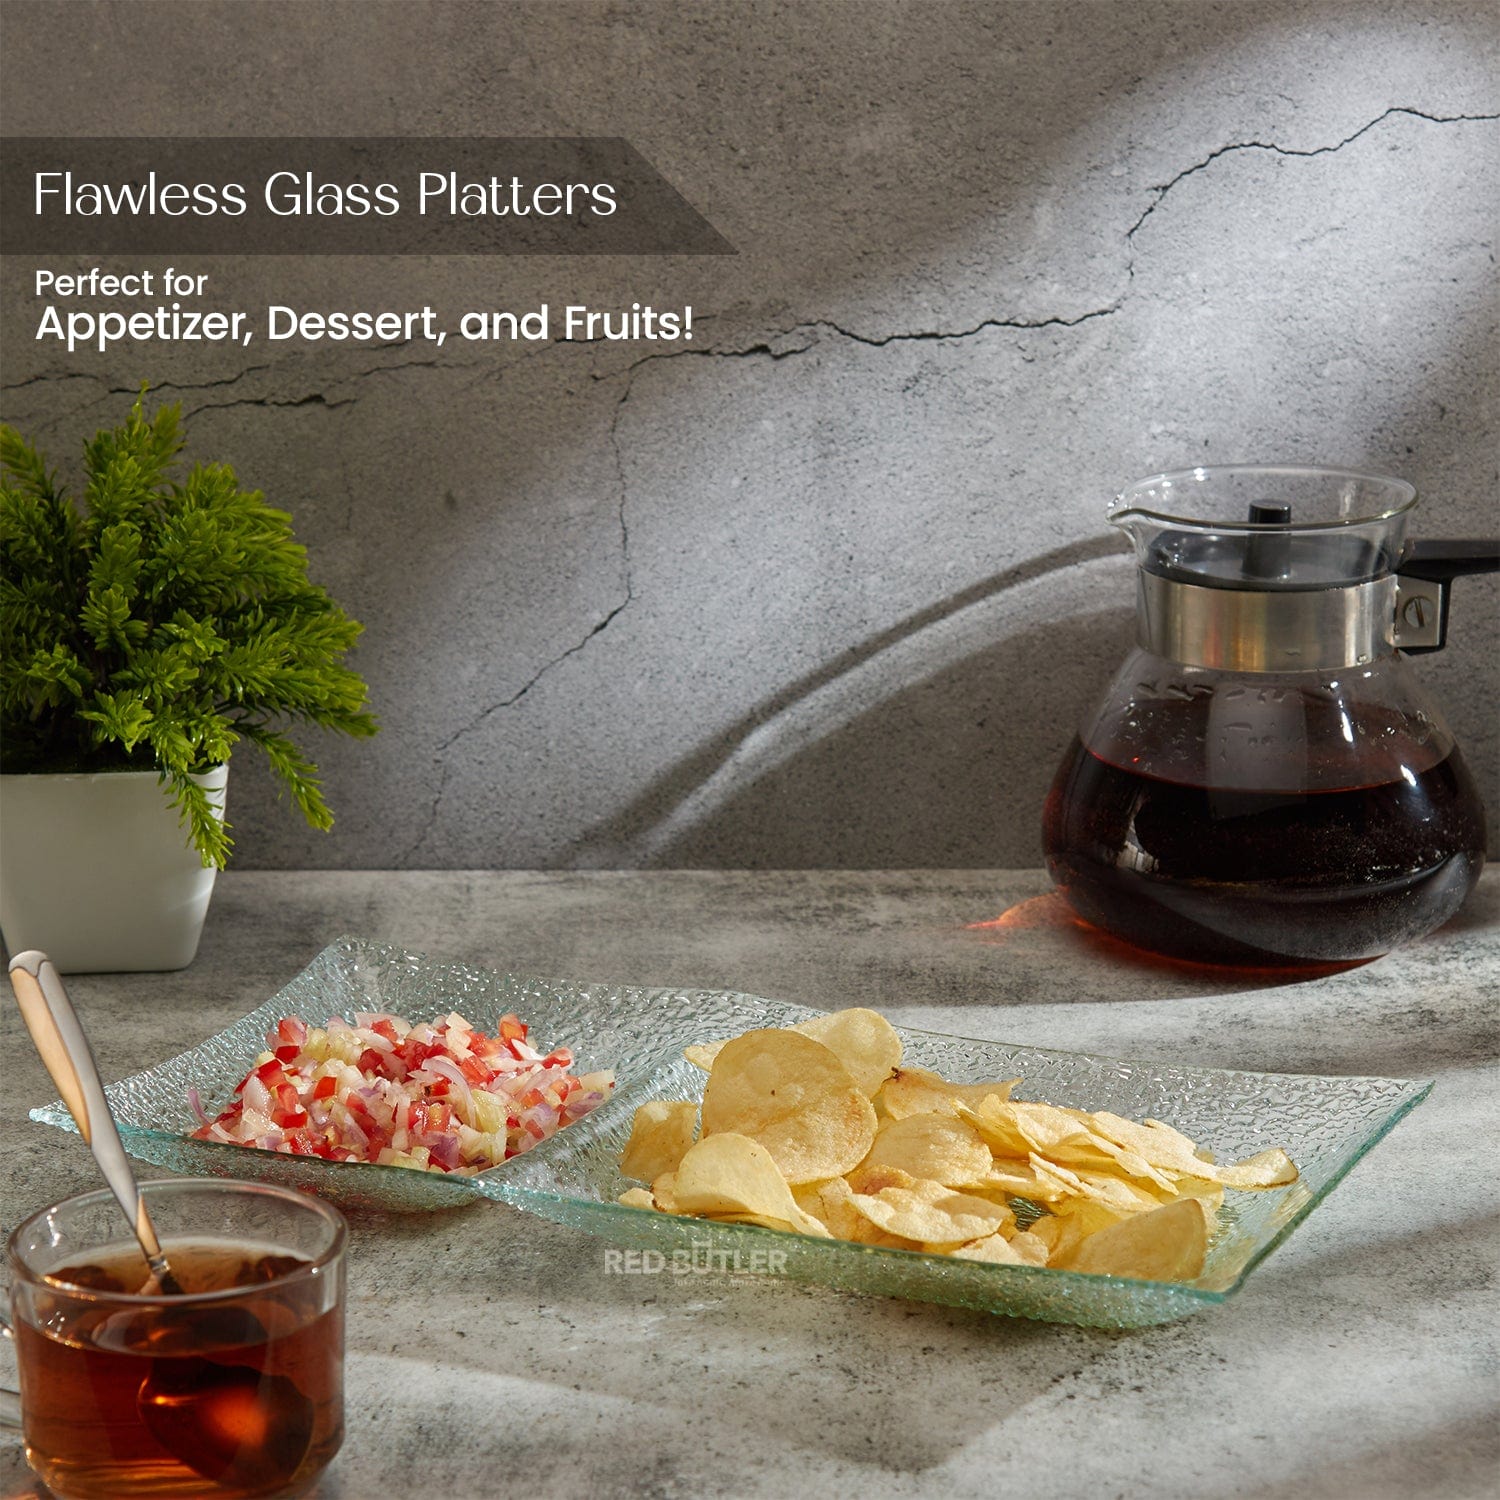 Red Butler Platter Glass Platter- Two Section GPS34A1 Elegant Glass Platters for Stylish Serving | Versatile and Chic Tableware Redbutler